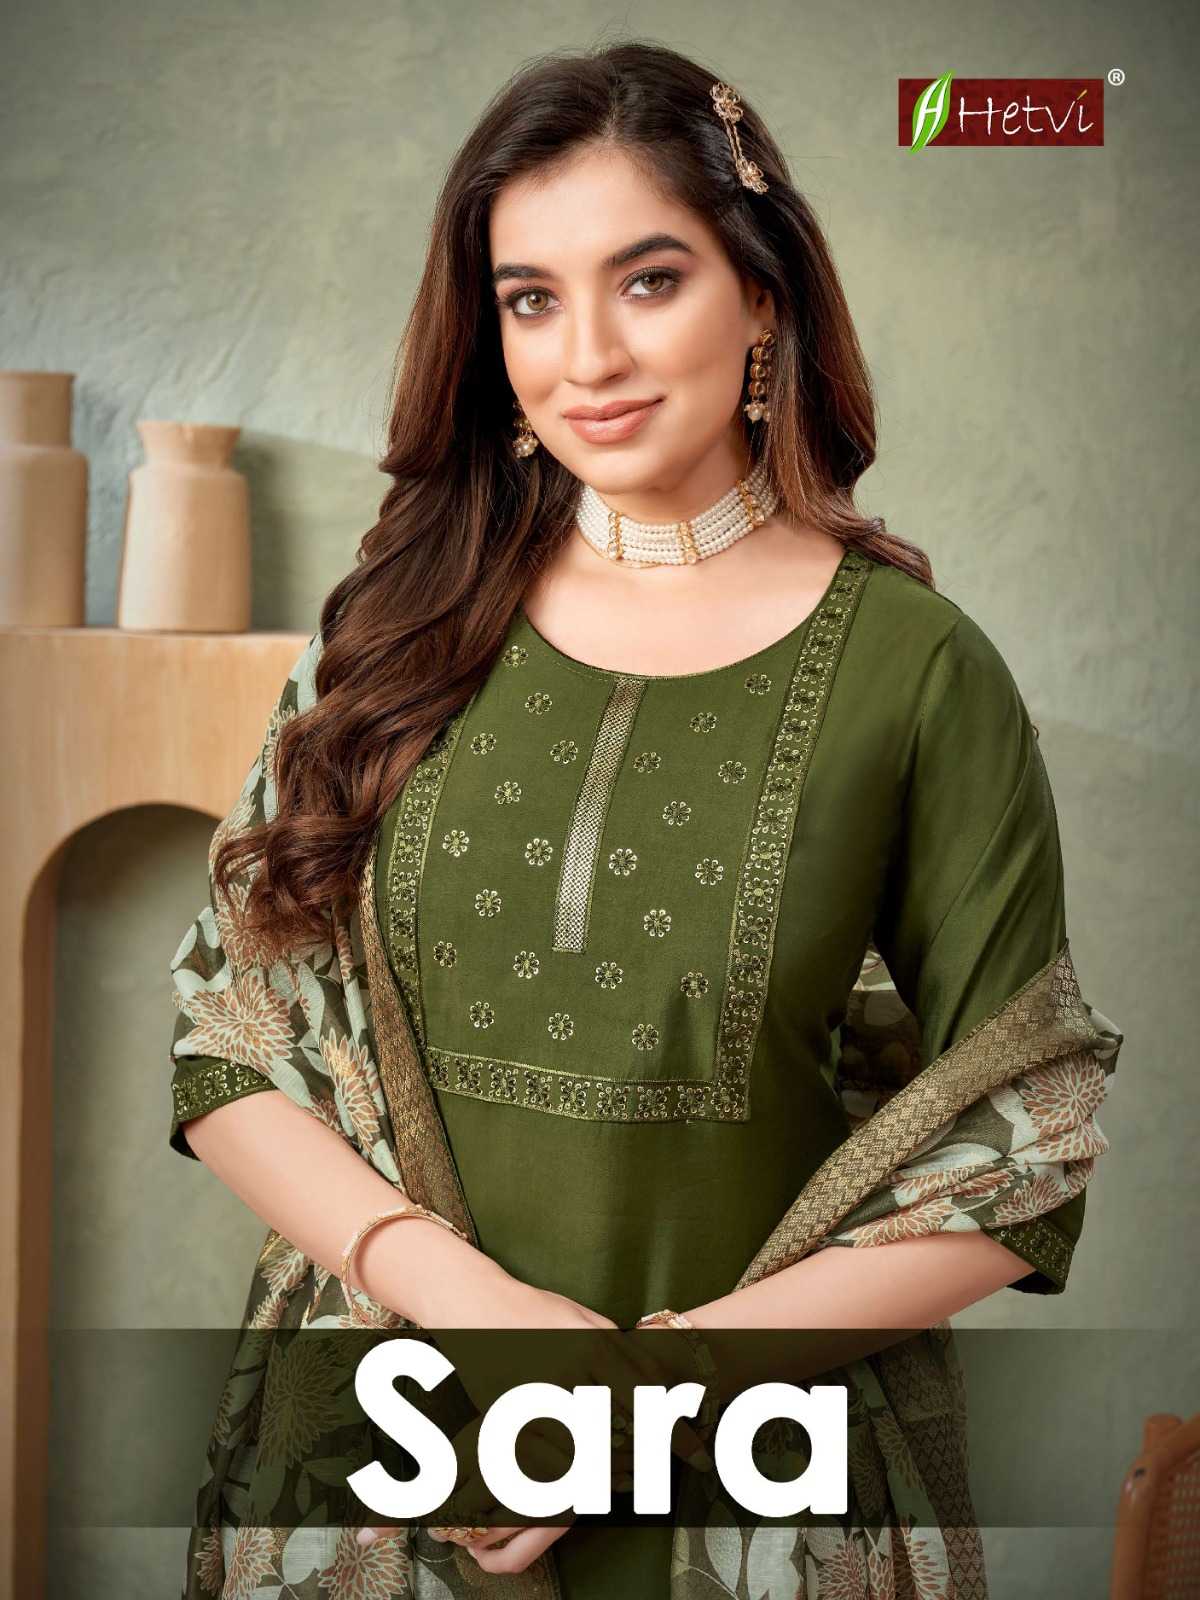 hetvi presents sara fashionable design roman silk full stitch salwar kameez